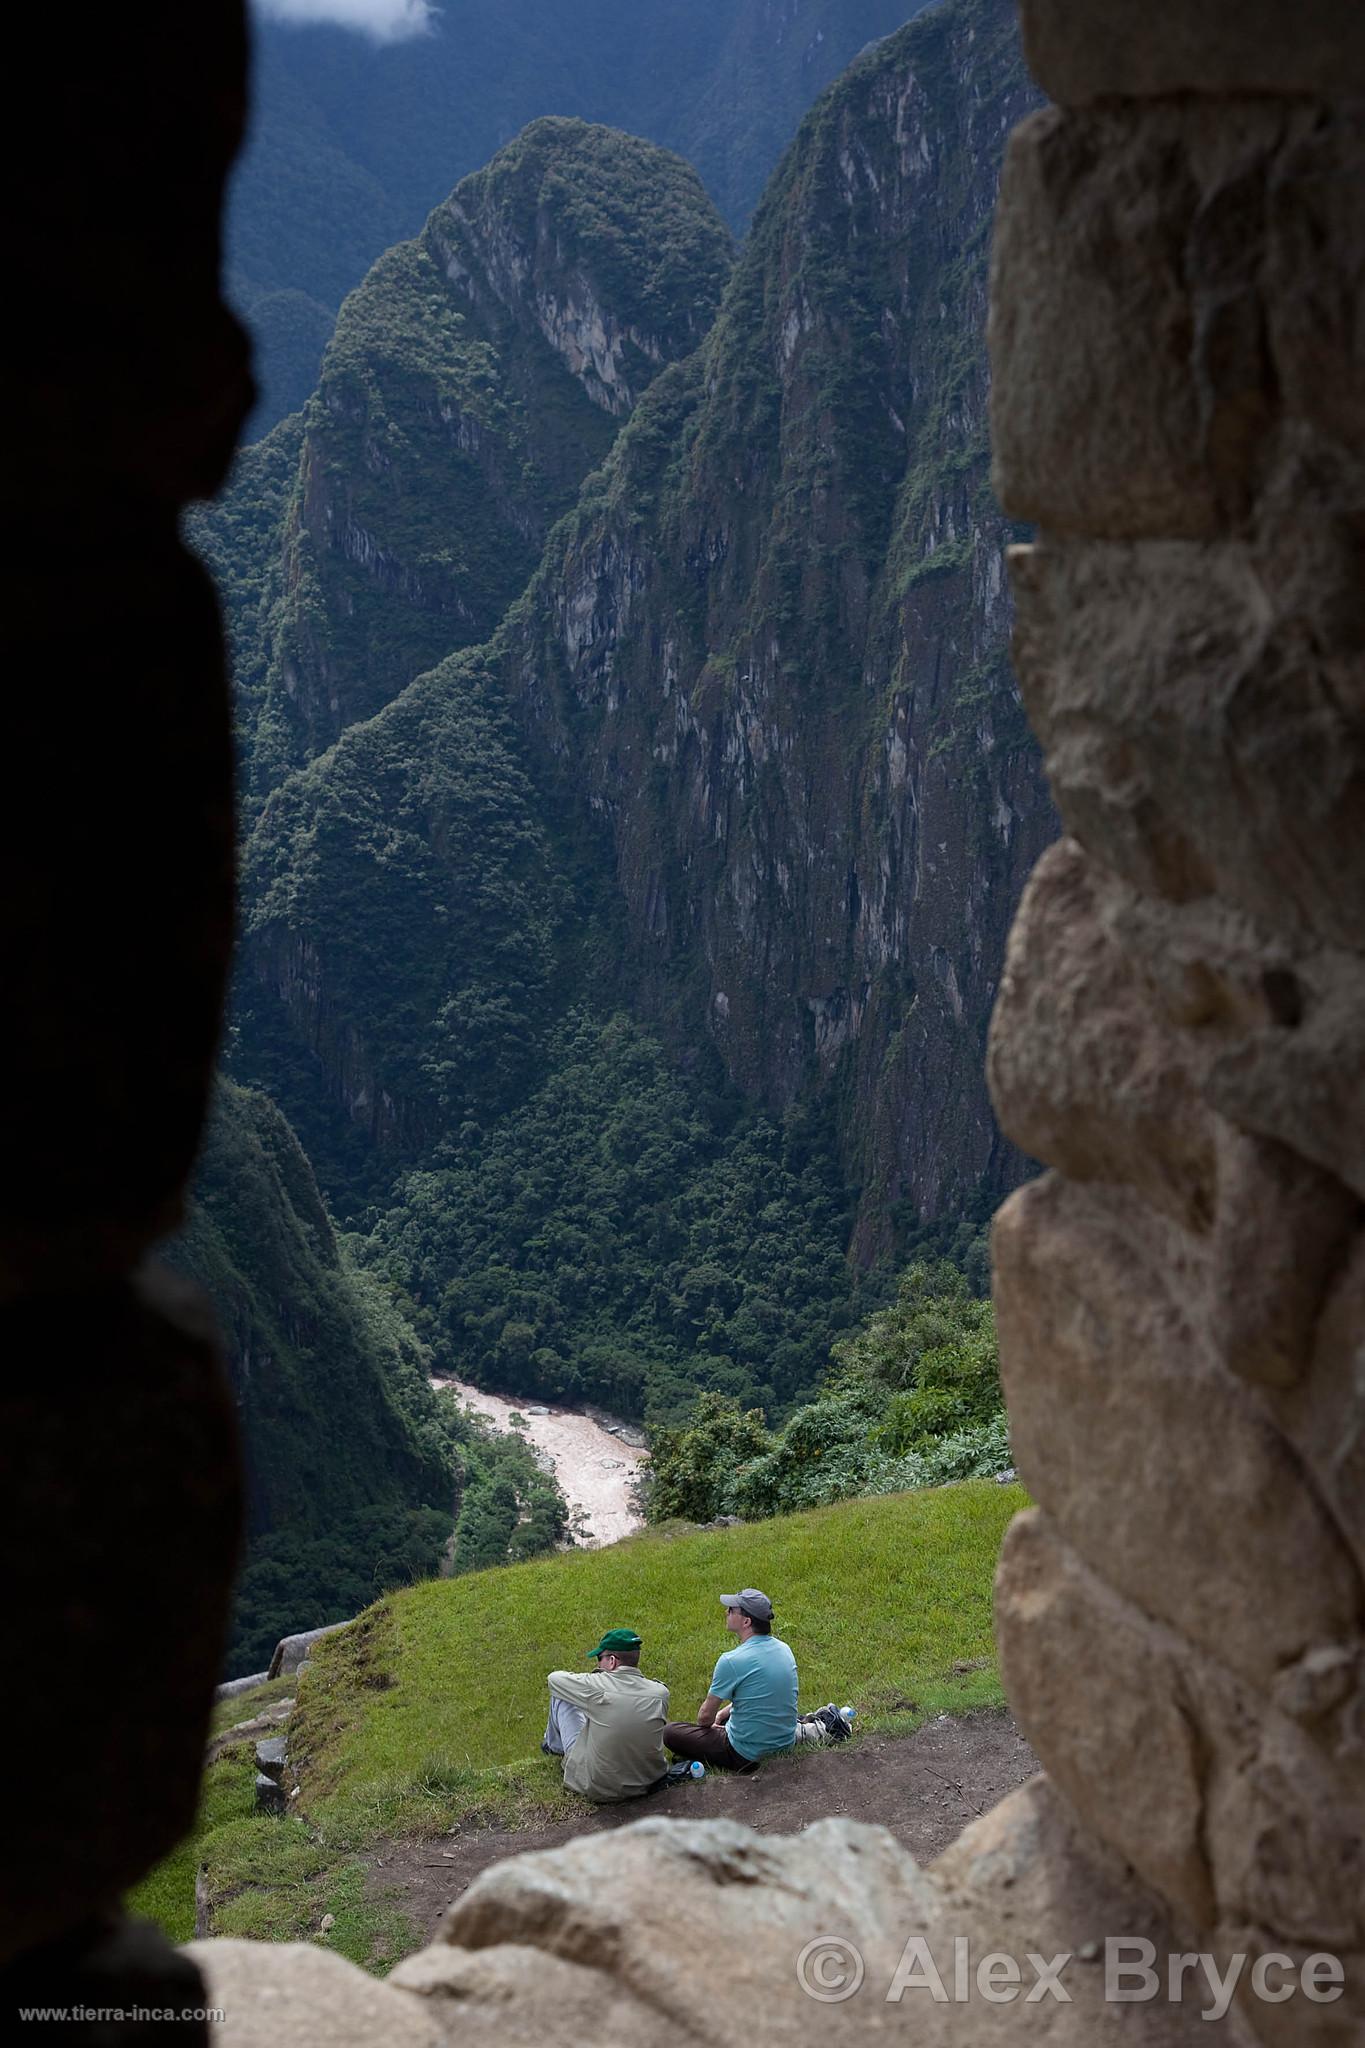 Turistas en la ciudadela de Machu Picchu